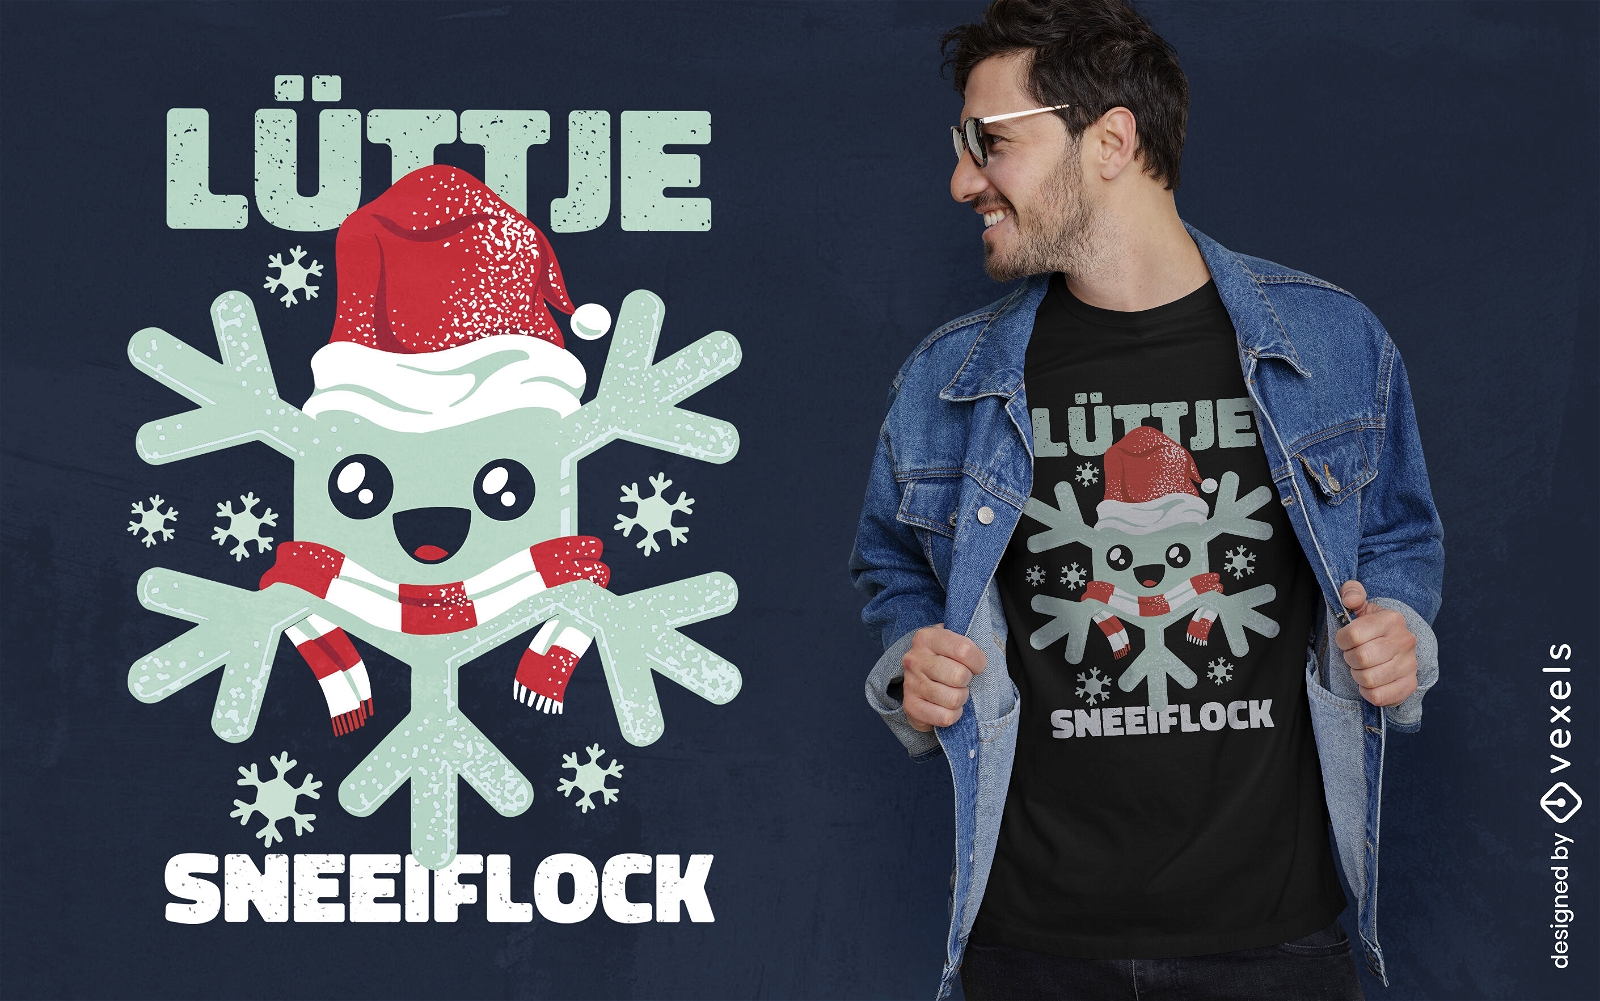 Chrsitmas snowflake children's winter t-shirt design